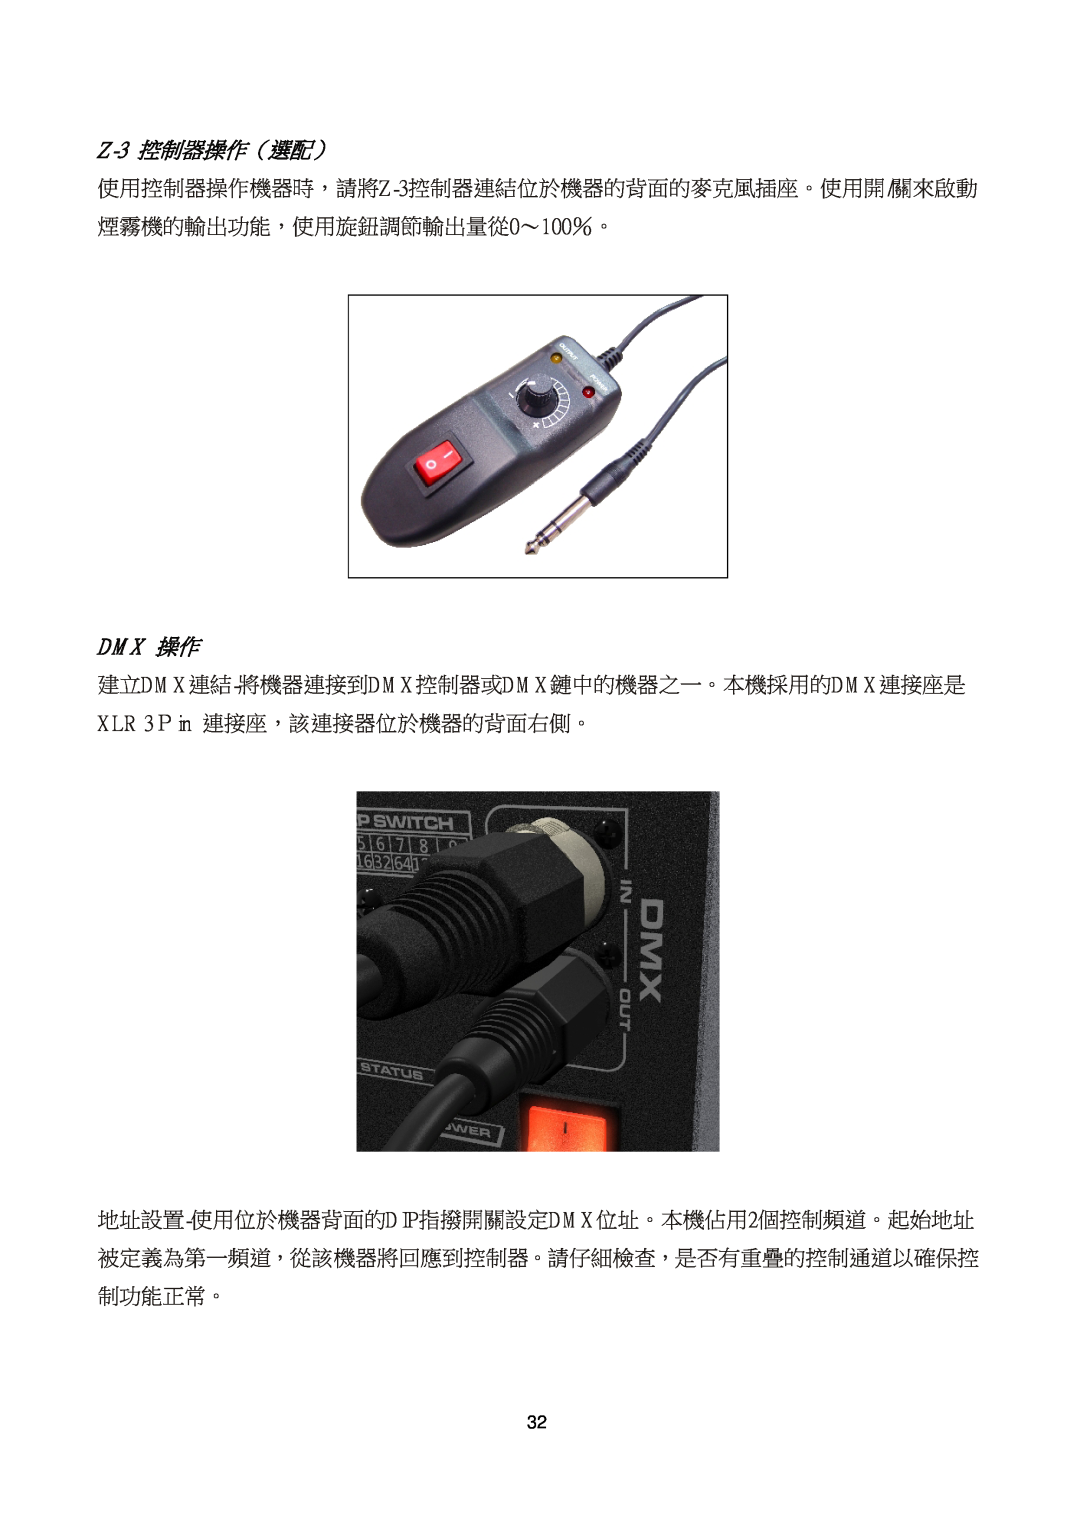 Antari Lighting and Effects Z-350 user manual Z-3控制器操作（選配）, D M X 操作 